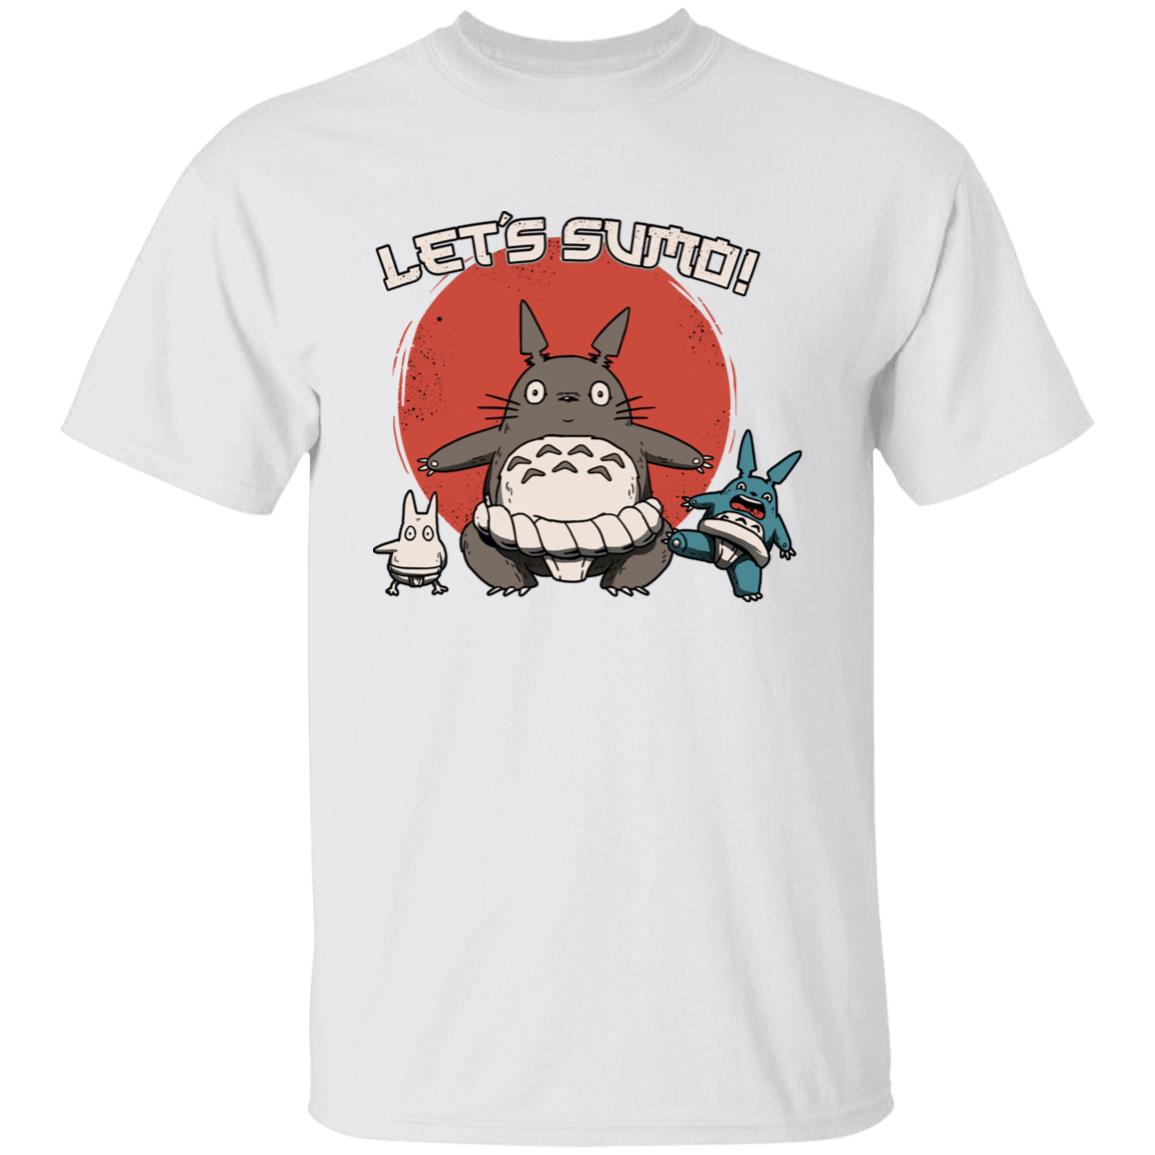 Totoro Let’s Sumo T Shirt Ghibli Store ghibli.store